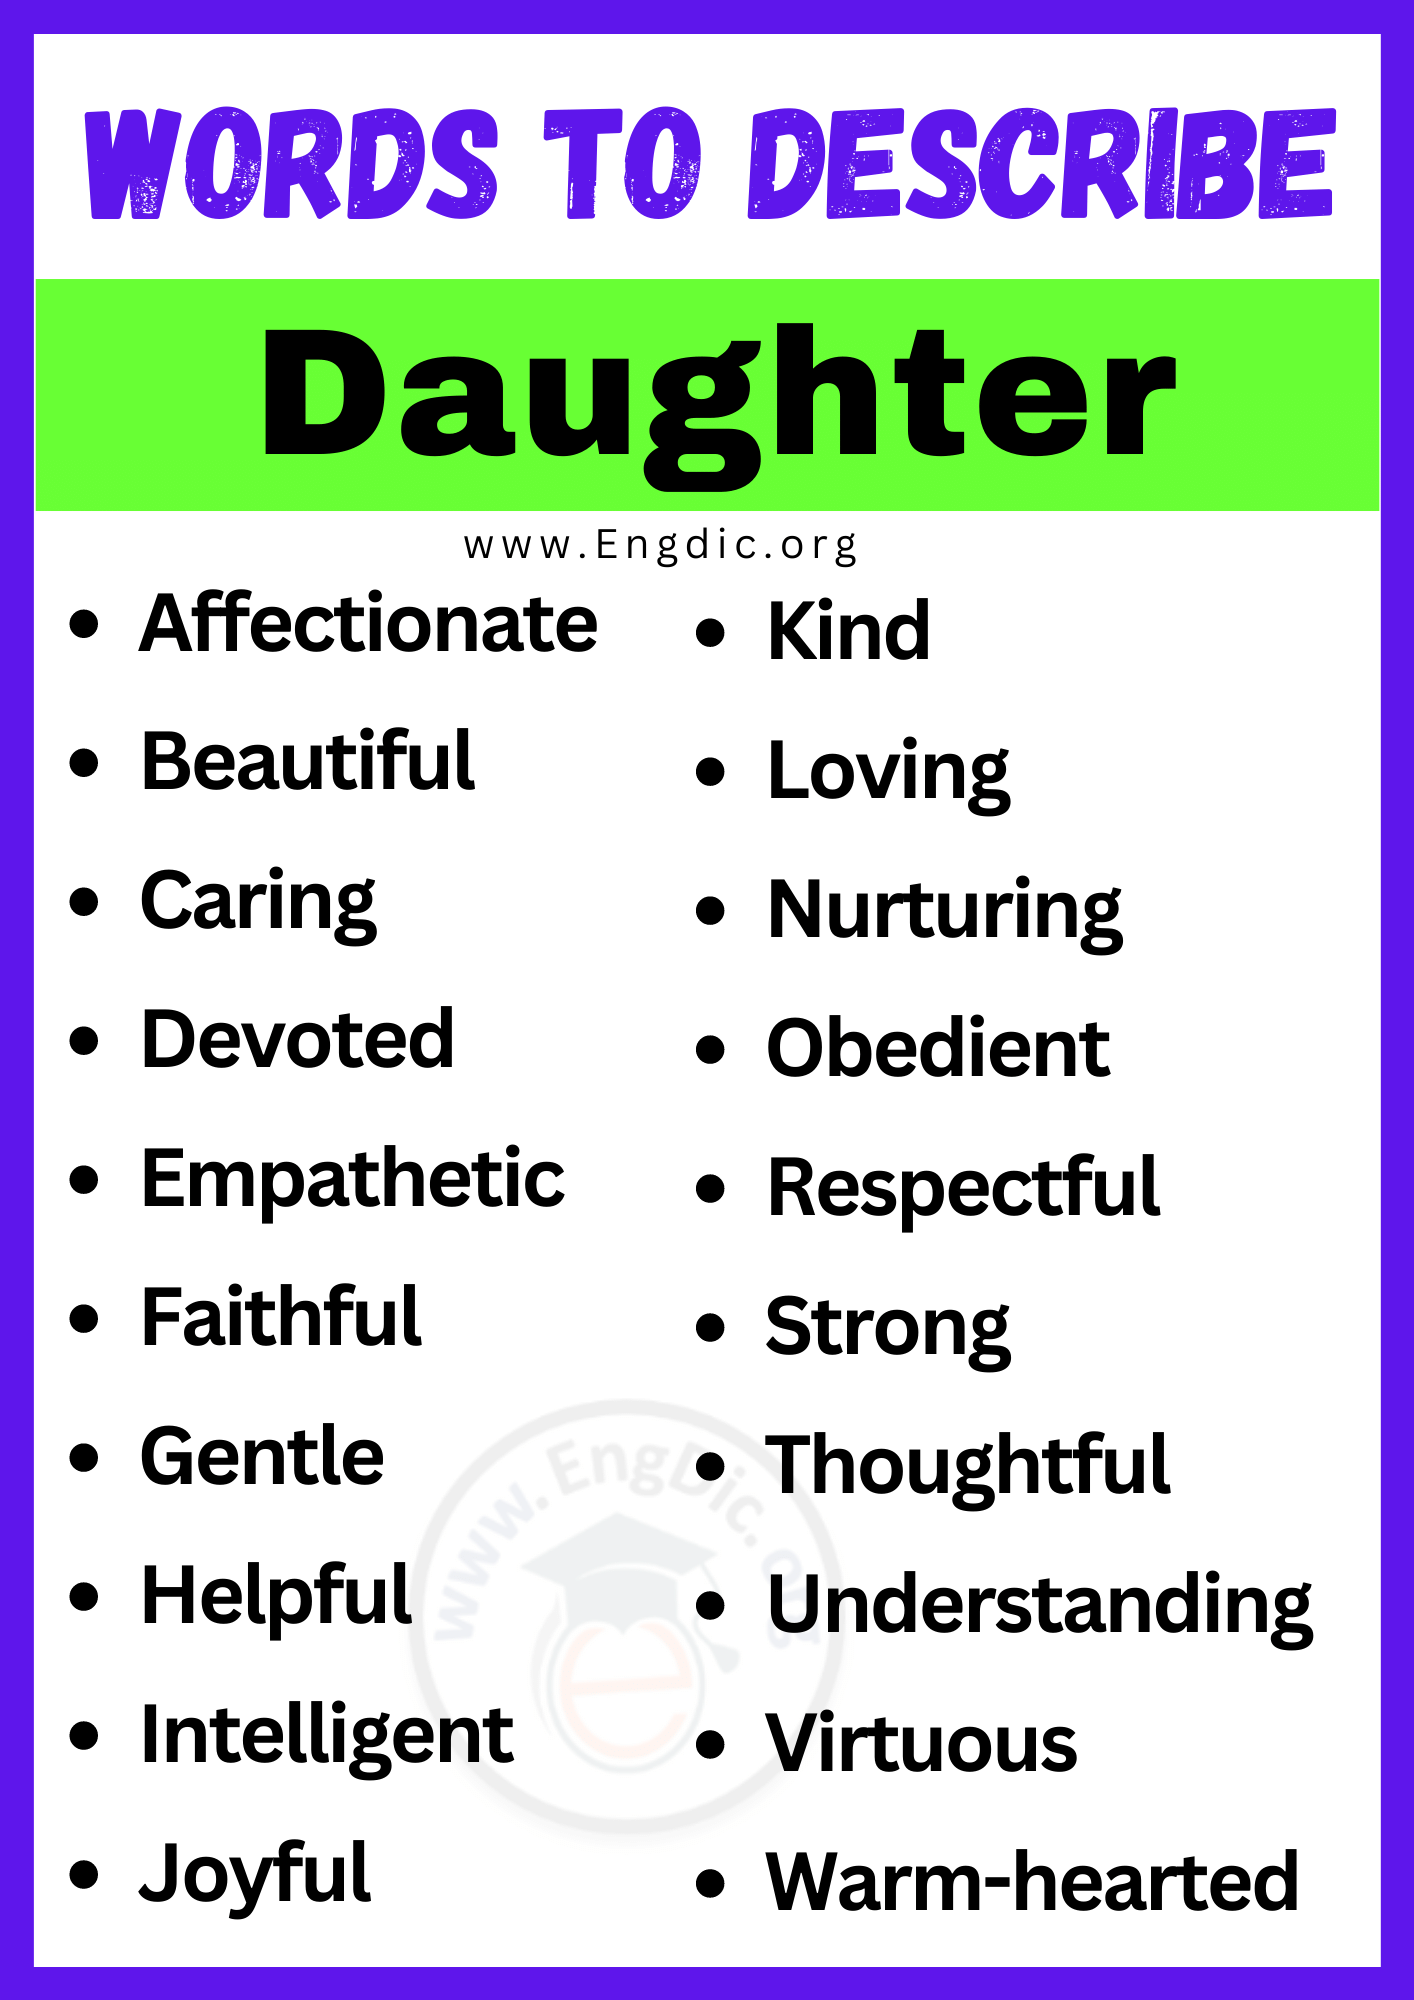 Words to Describe Daughter